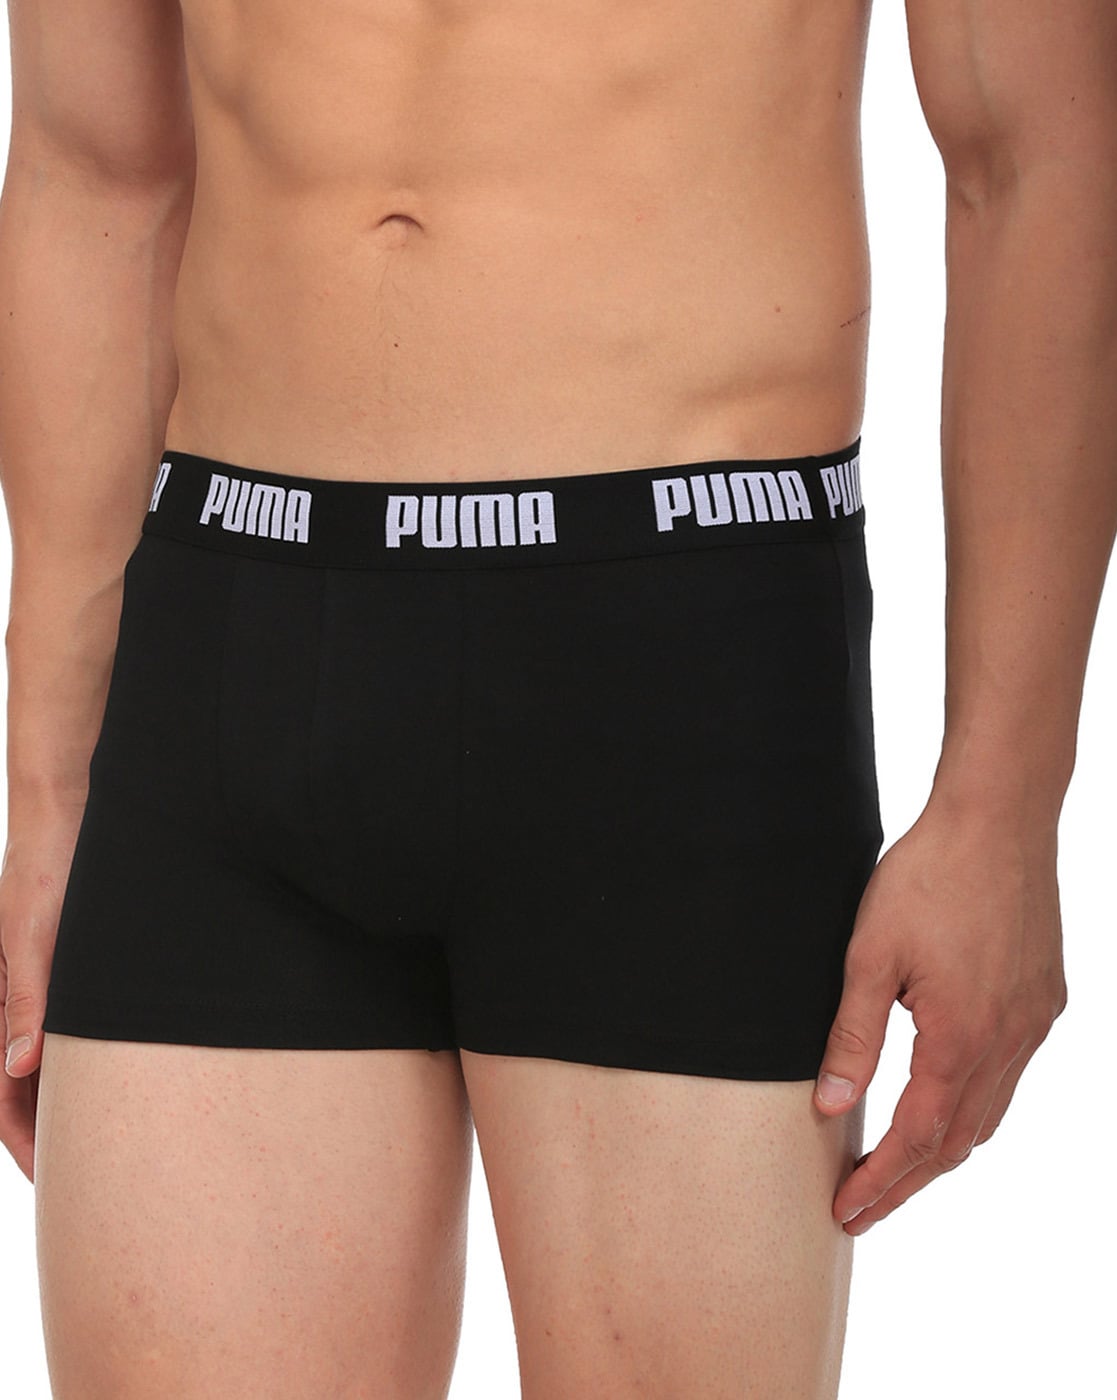 puma trunks